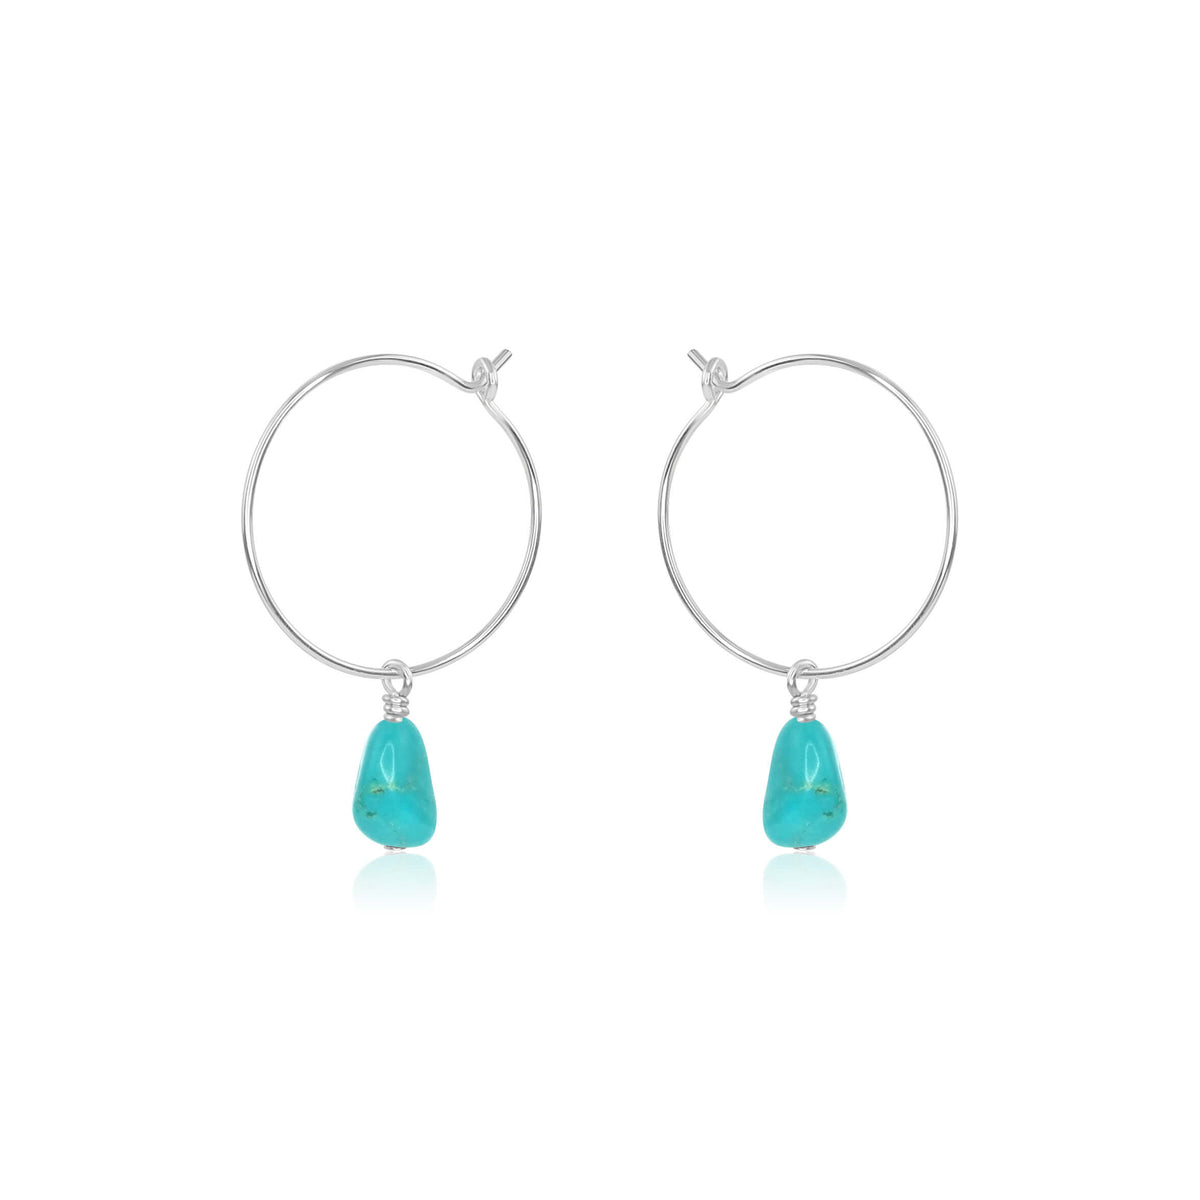 Raw Nugget Hoop Earrings - Turquoise - Sterling Silver - Luna Tide Handmade Jewellery